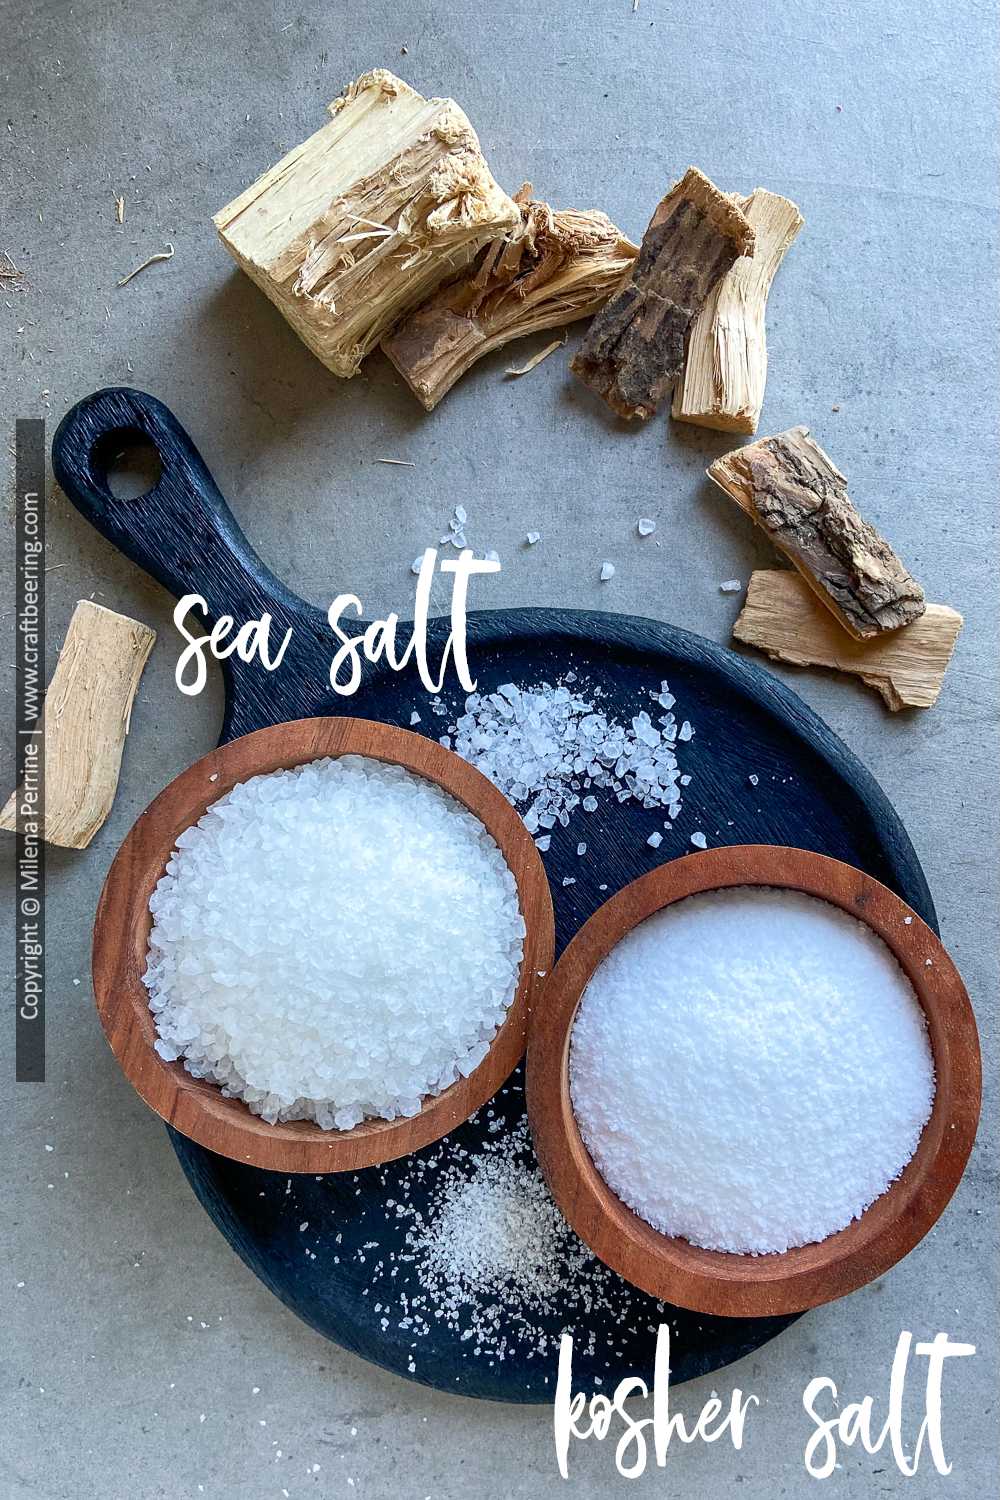 Sea salt and kosher salt are best for smoking with hickory, alder wood or fruit woods.